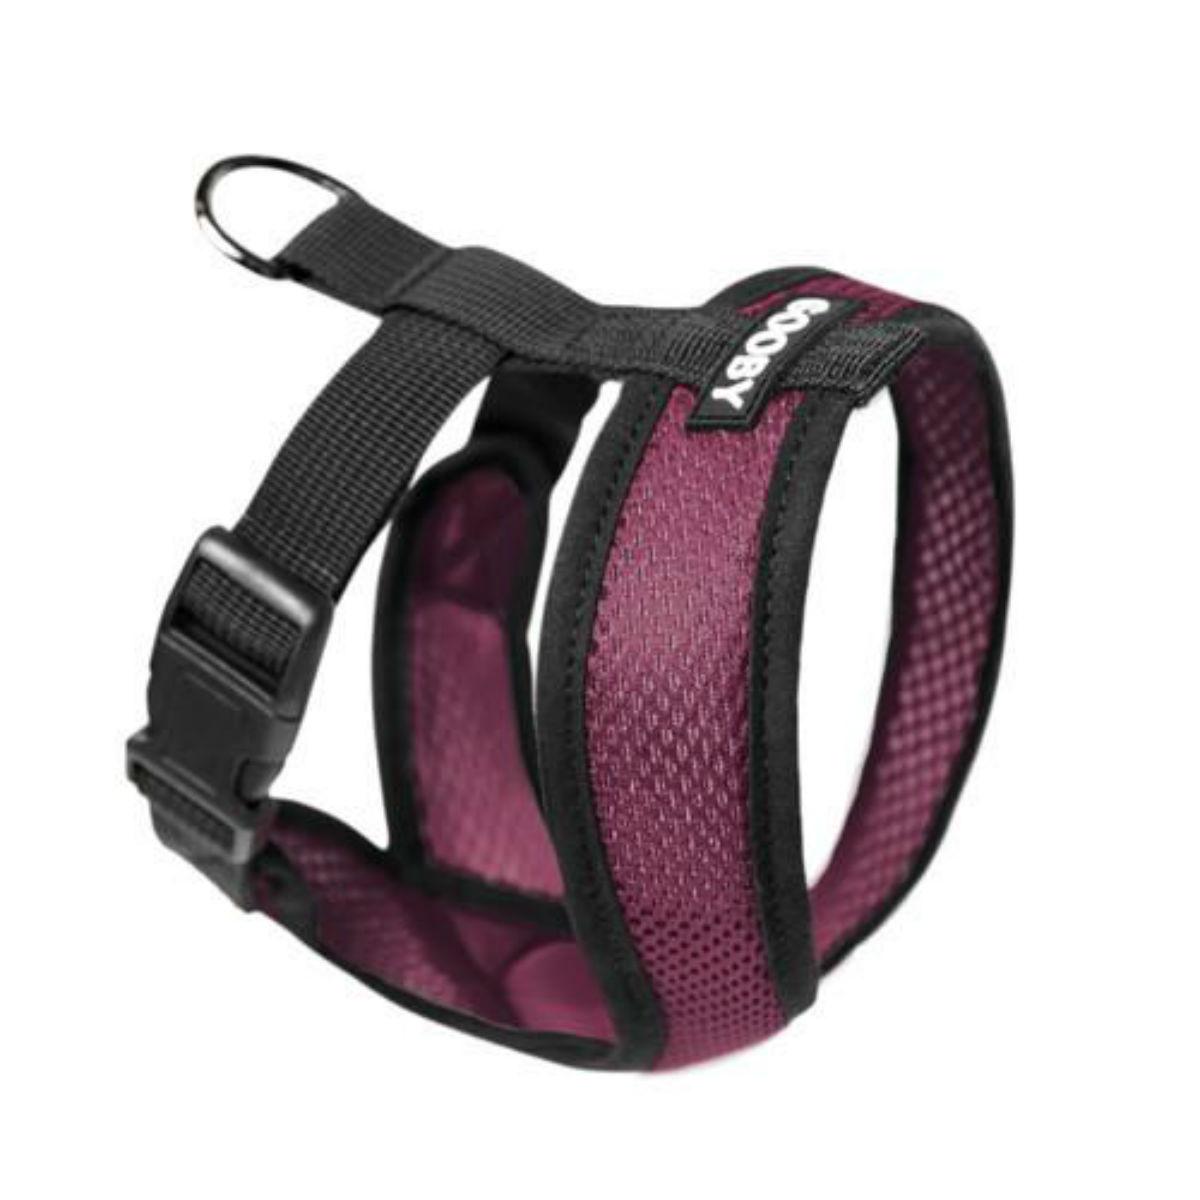 Comfort X Dog Harness by Gooby - Purple